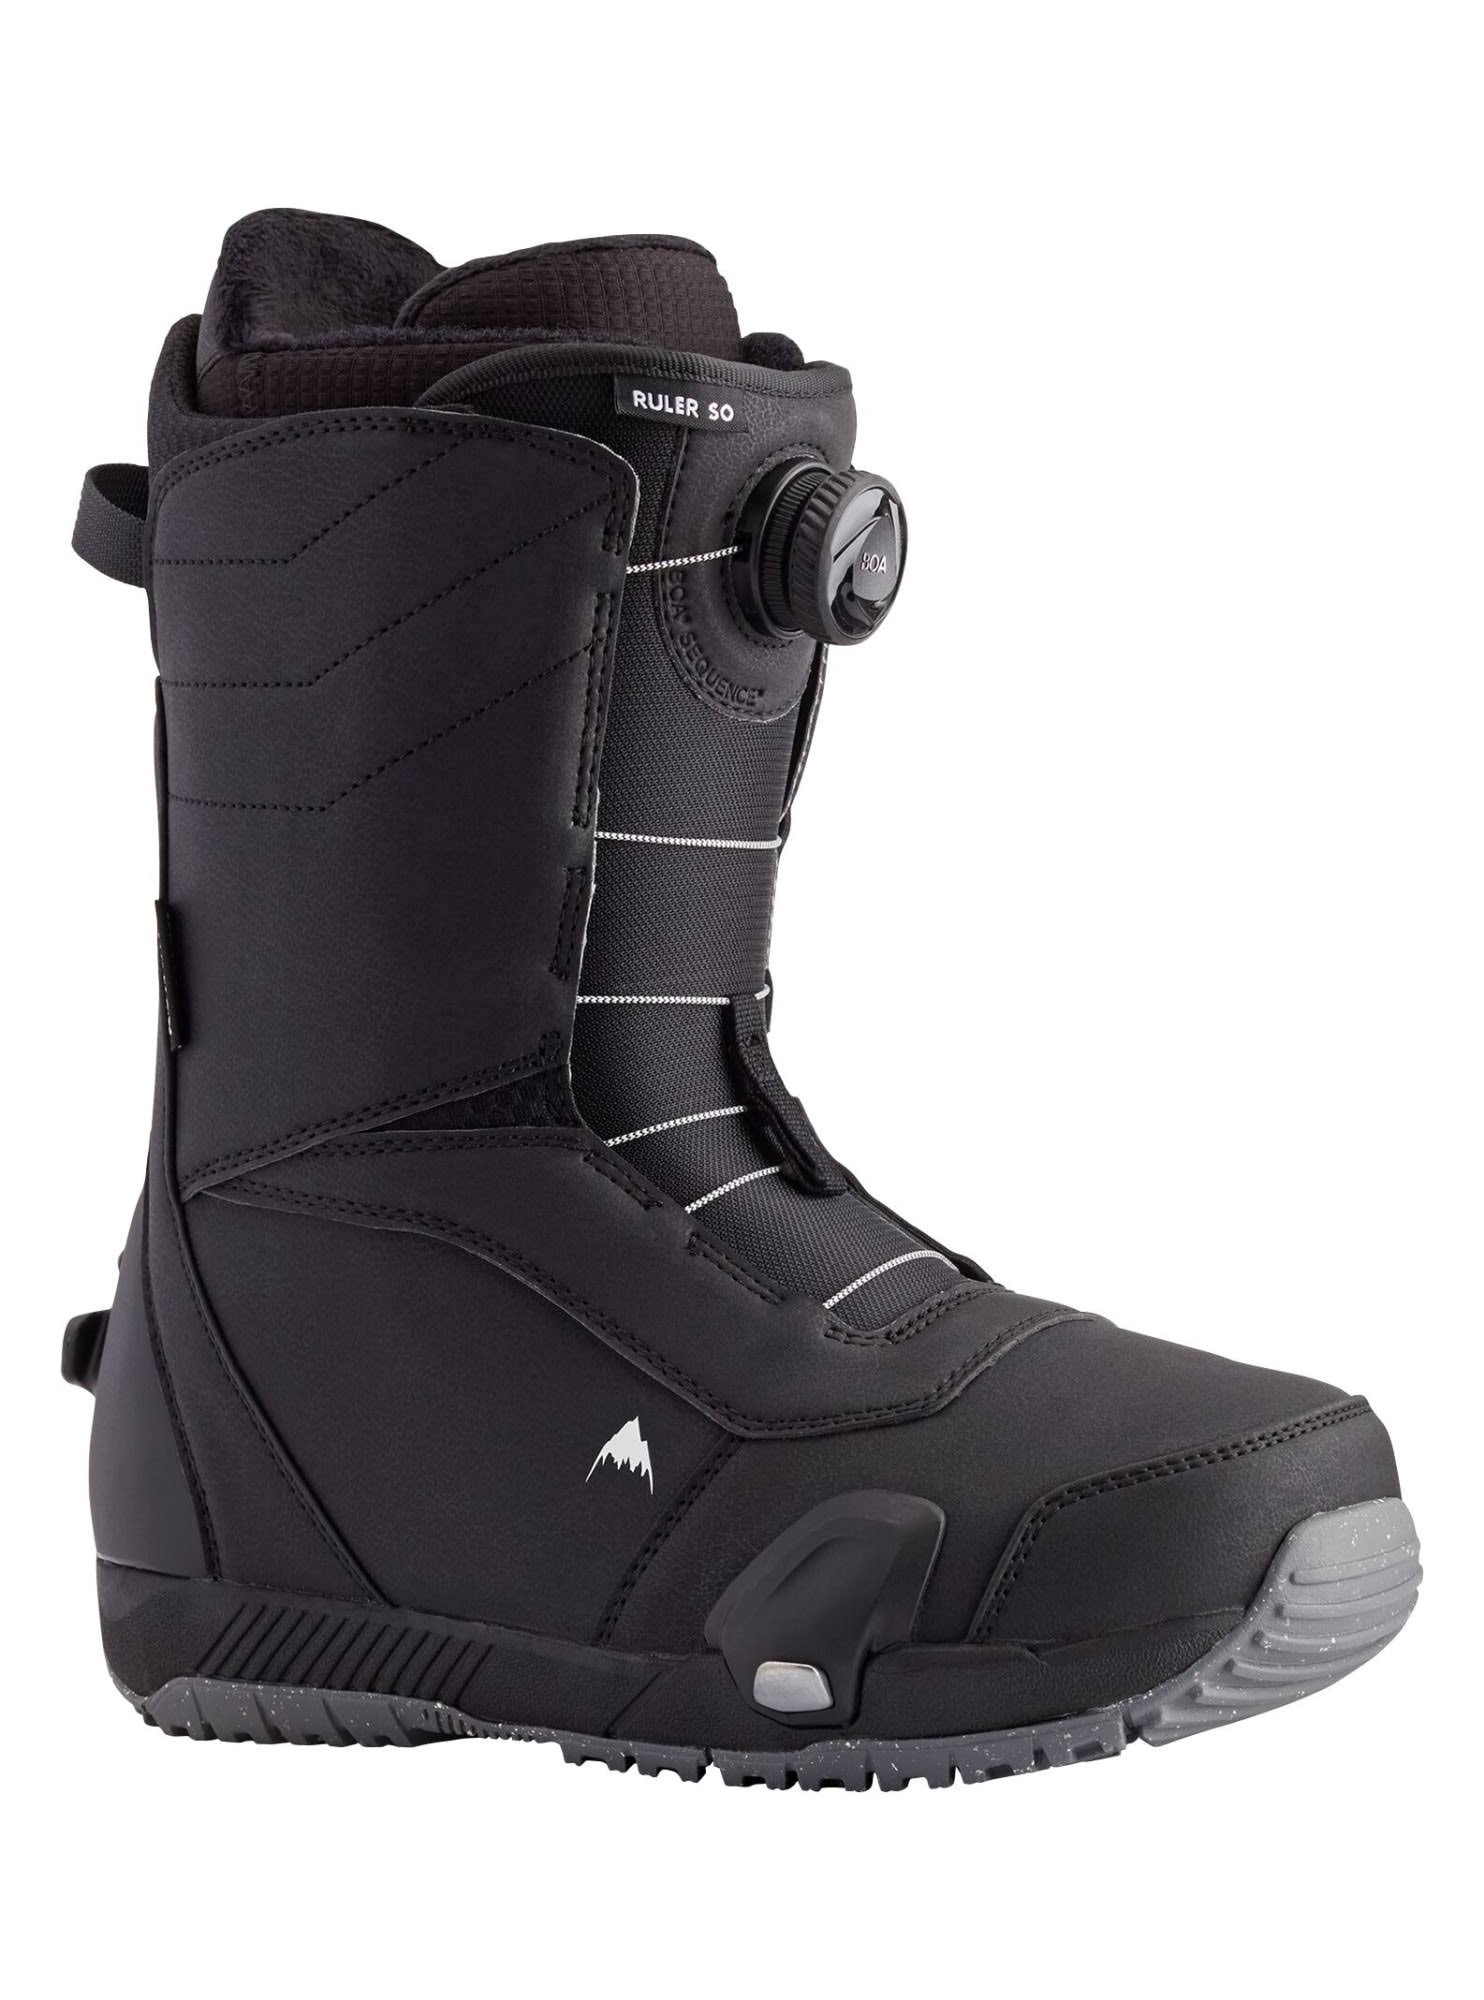 Burton Ruler Step On Snowboard Boots (Black)